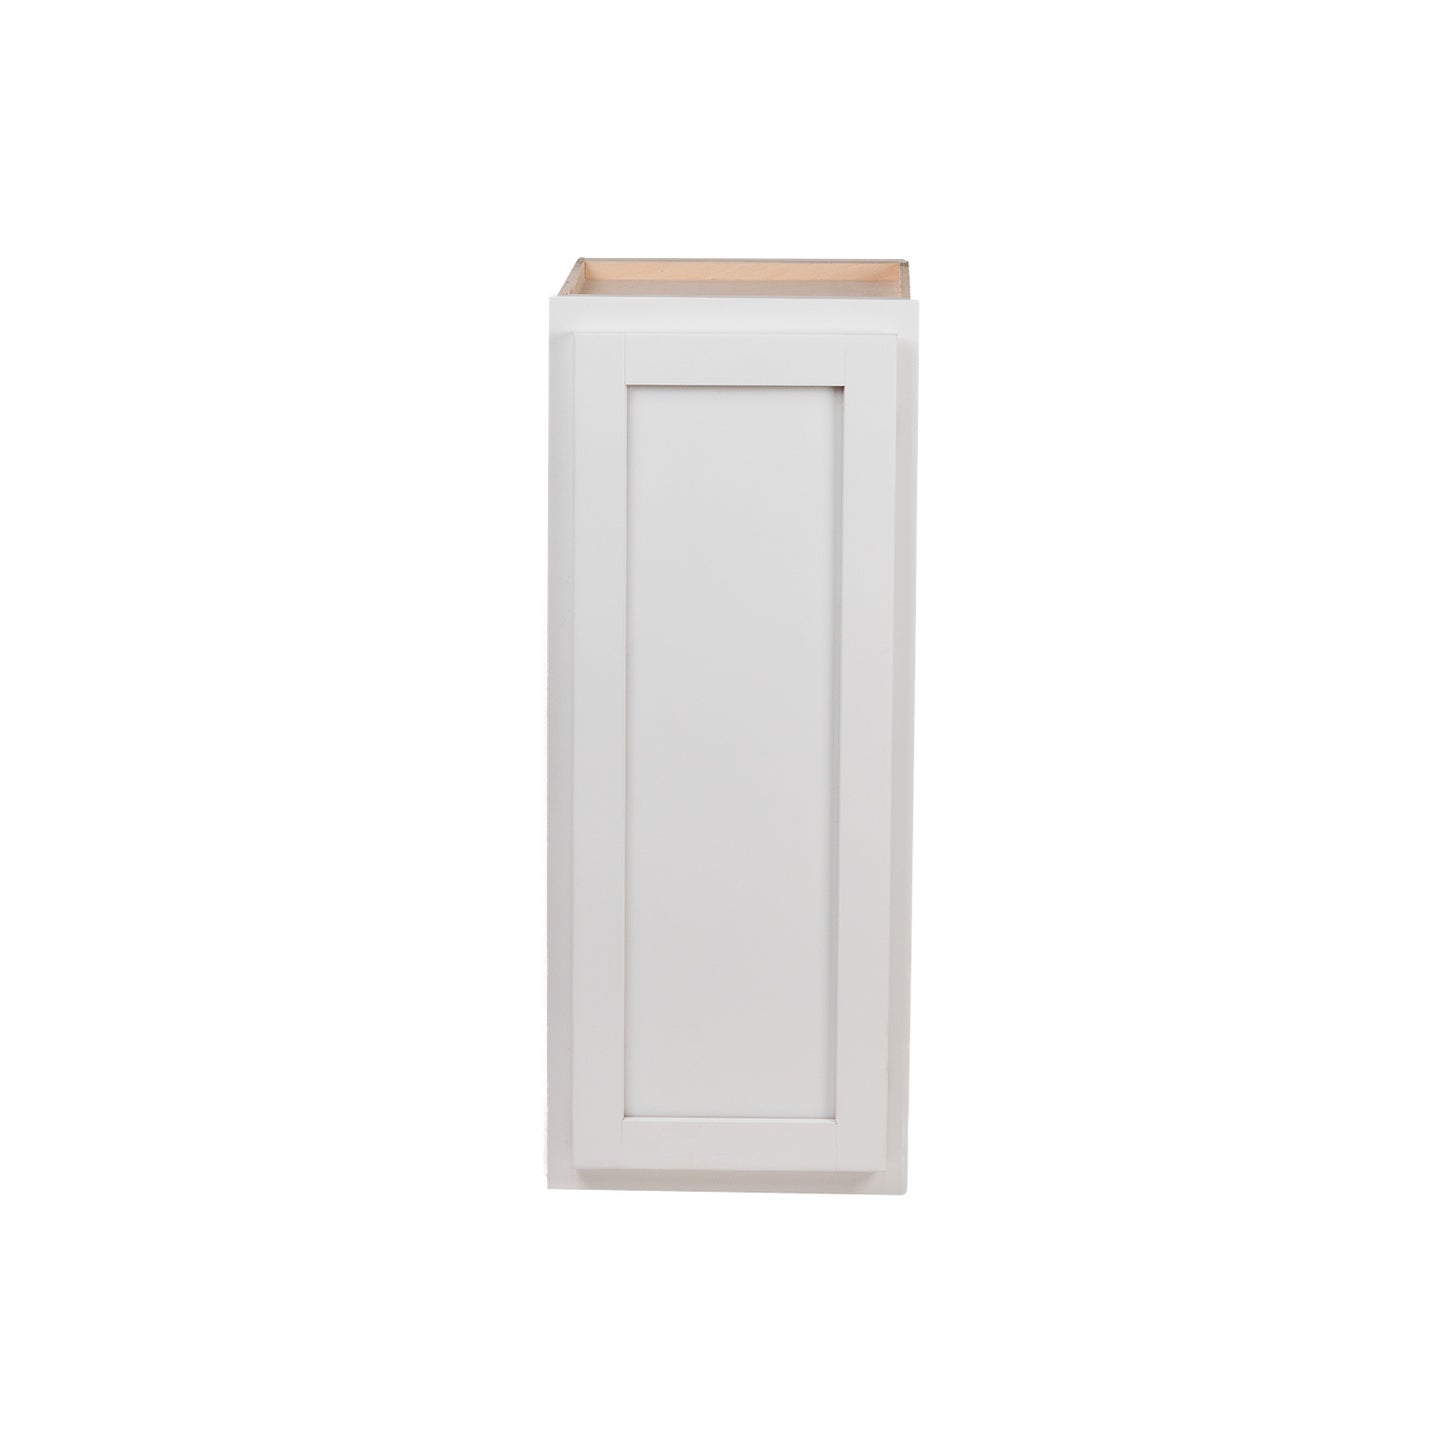 Quicklock RTA (Ready-to-Assemble) Pure White 9"Wx42"Hx12"D Wall Cabinet